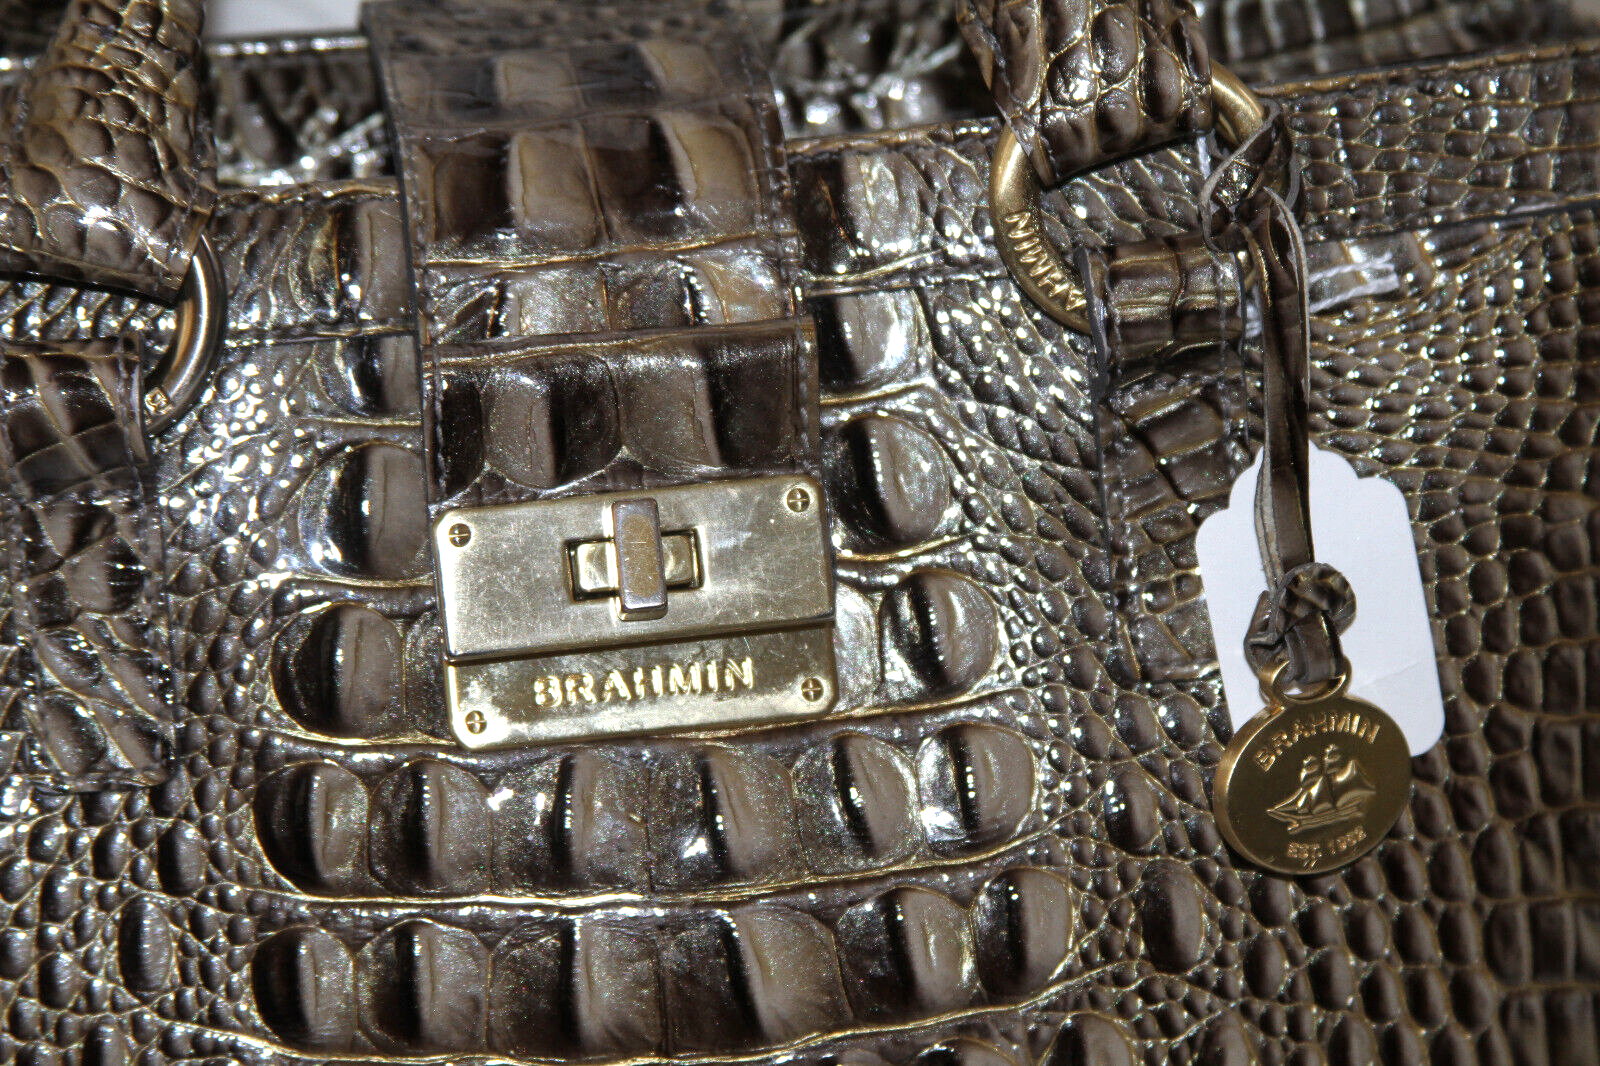 Brahmin Annabelle Melbourne Leather Satchel | eBay